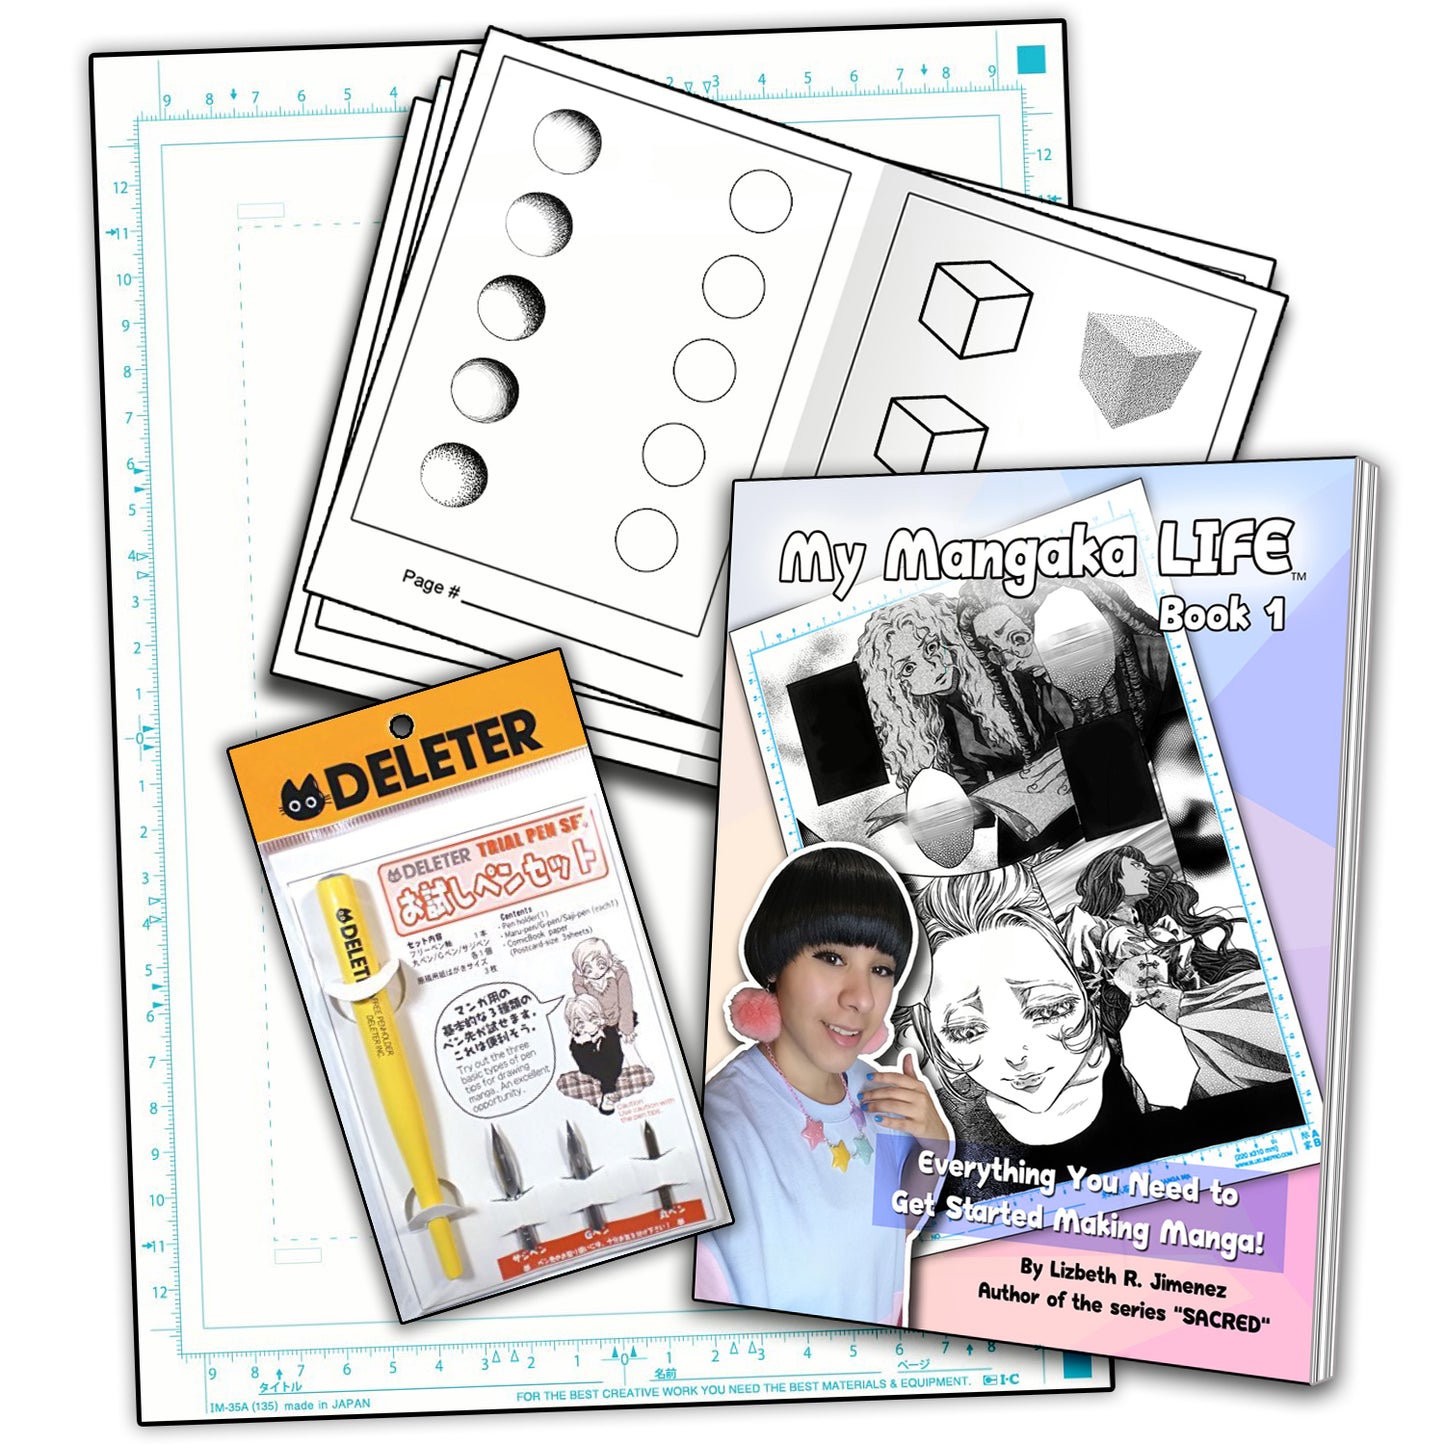 My Mangaka LIFE, book 1 - Special Starter Kit